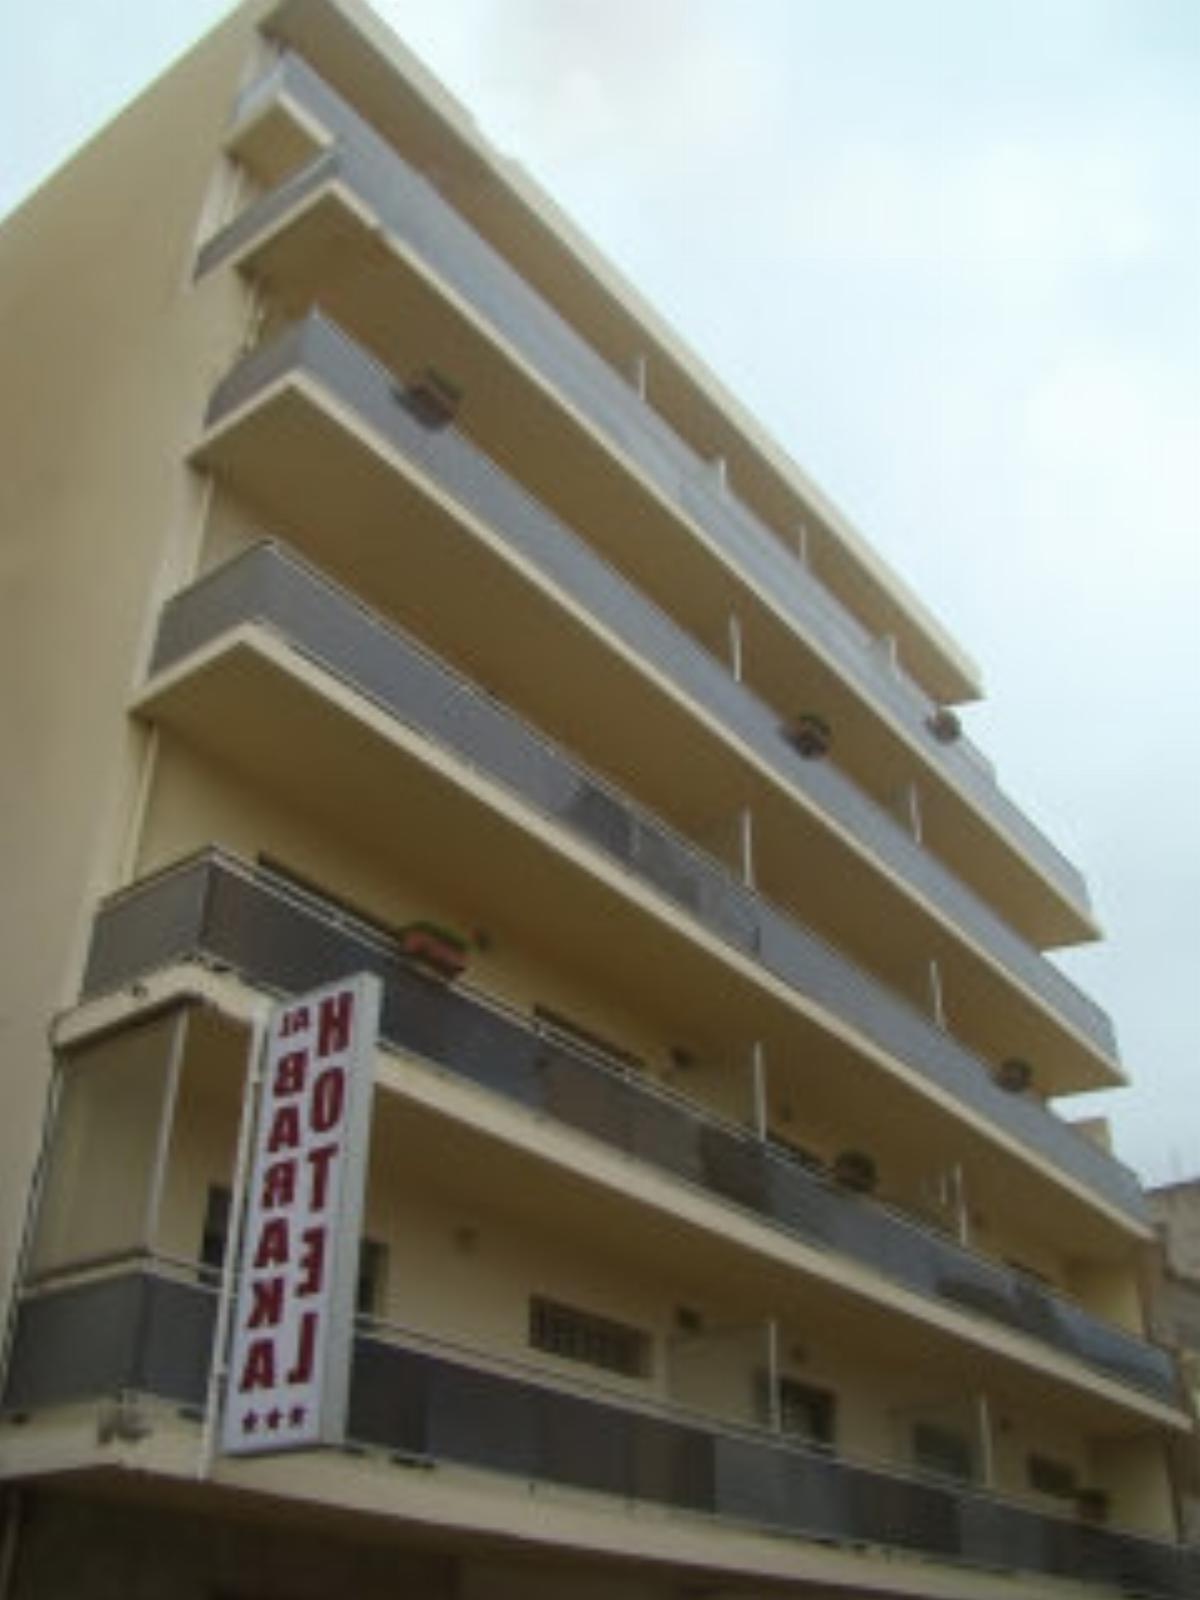 Al Baraka Hotel Dakar Senegal